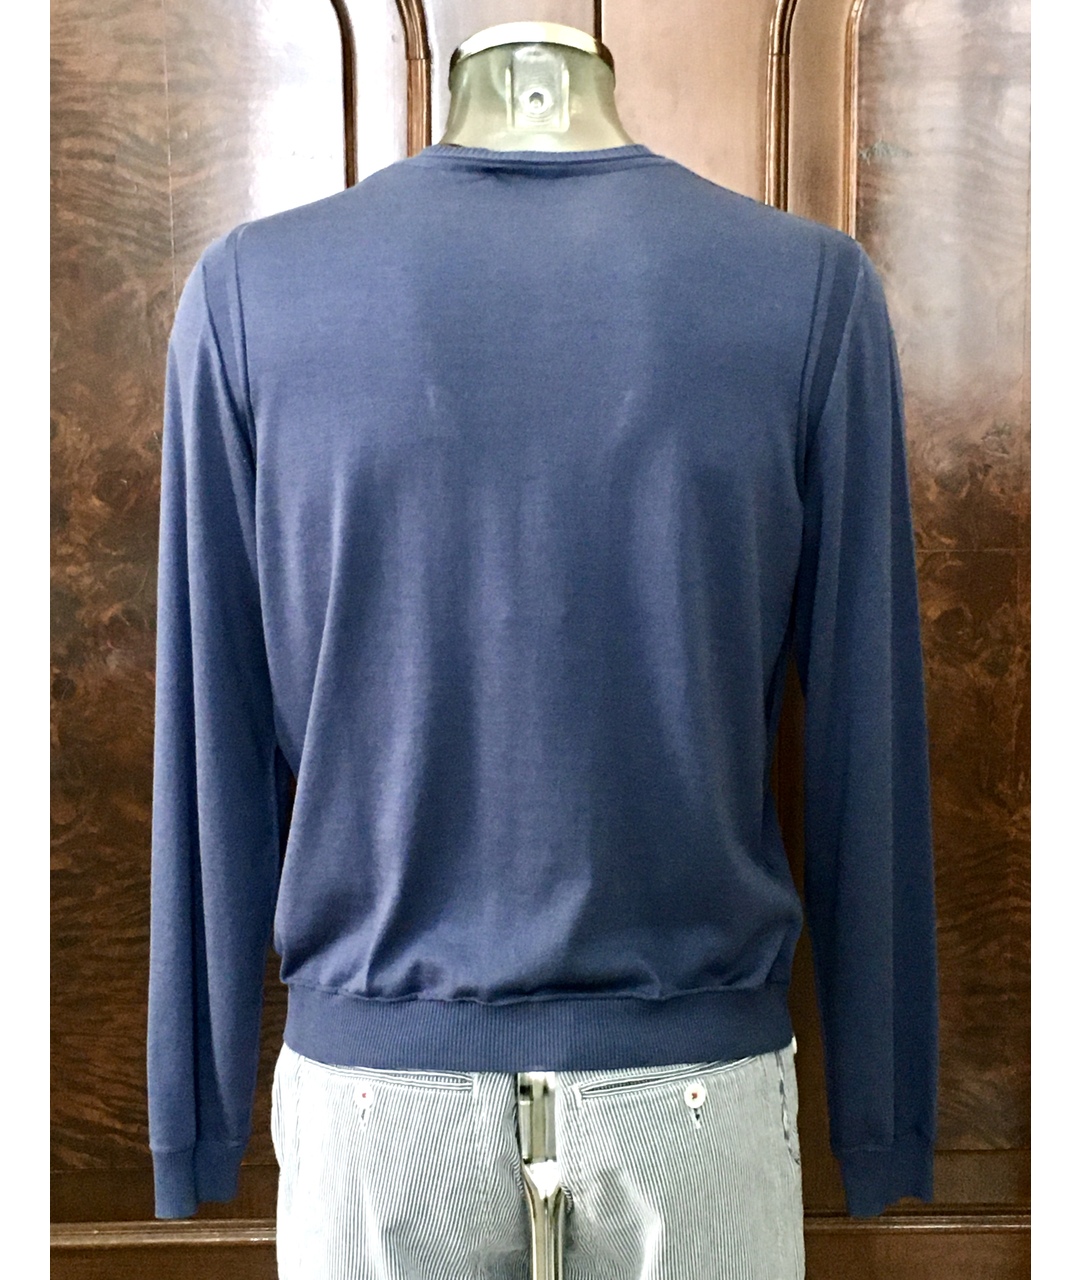 BILANCIONI Синий шелковый джемпер / свитер, фото 2